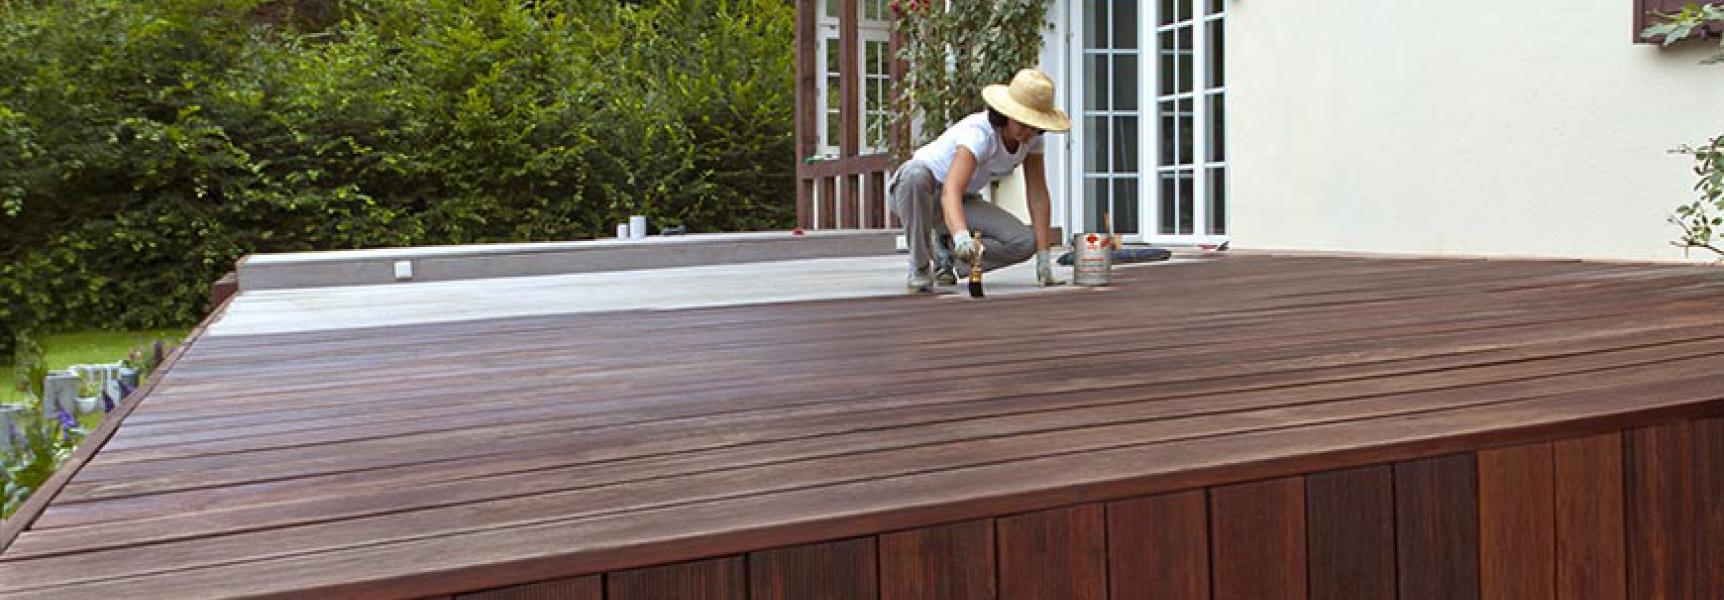 Woman paints terrace with terrace wood oil